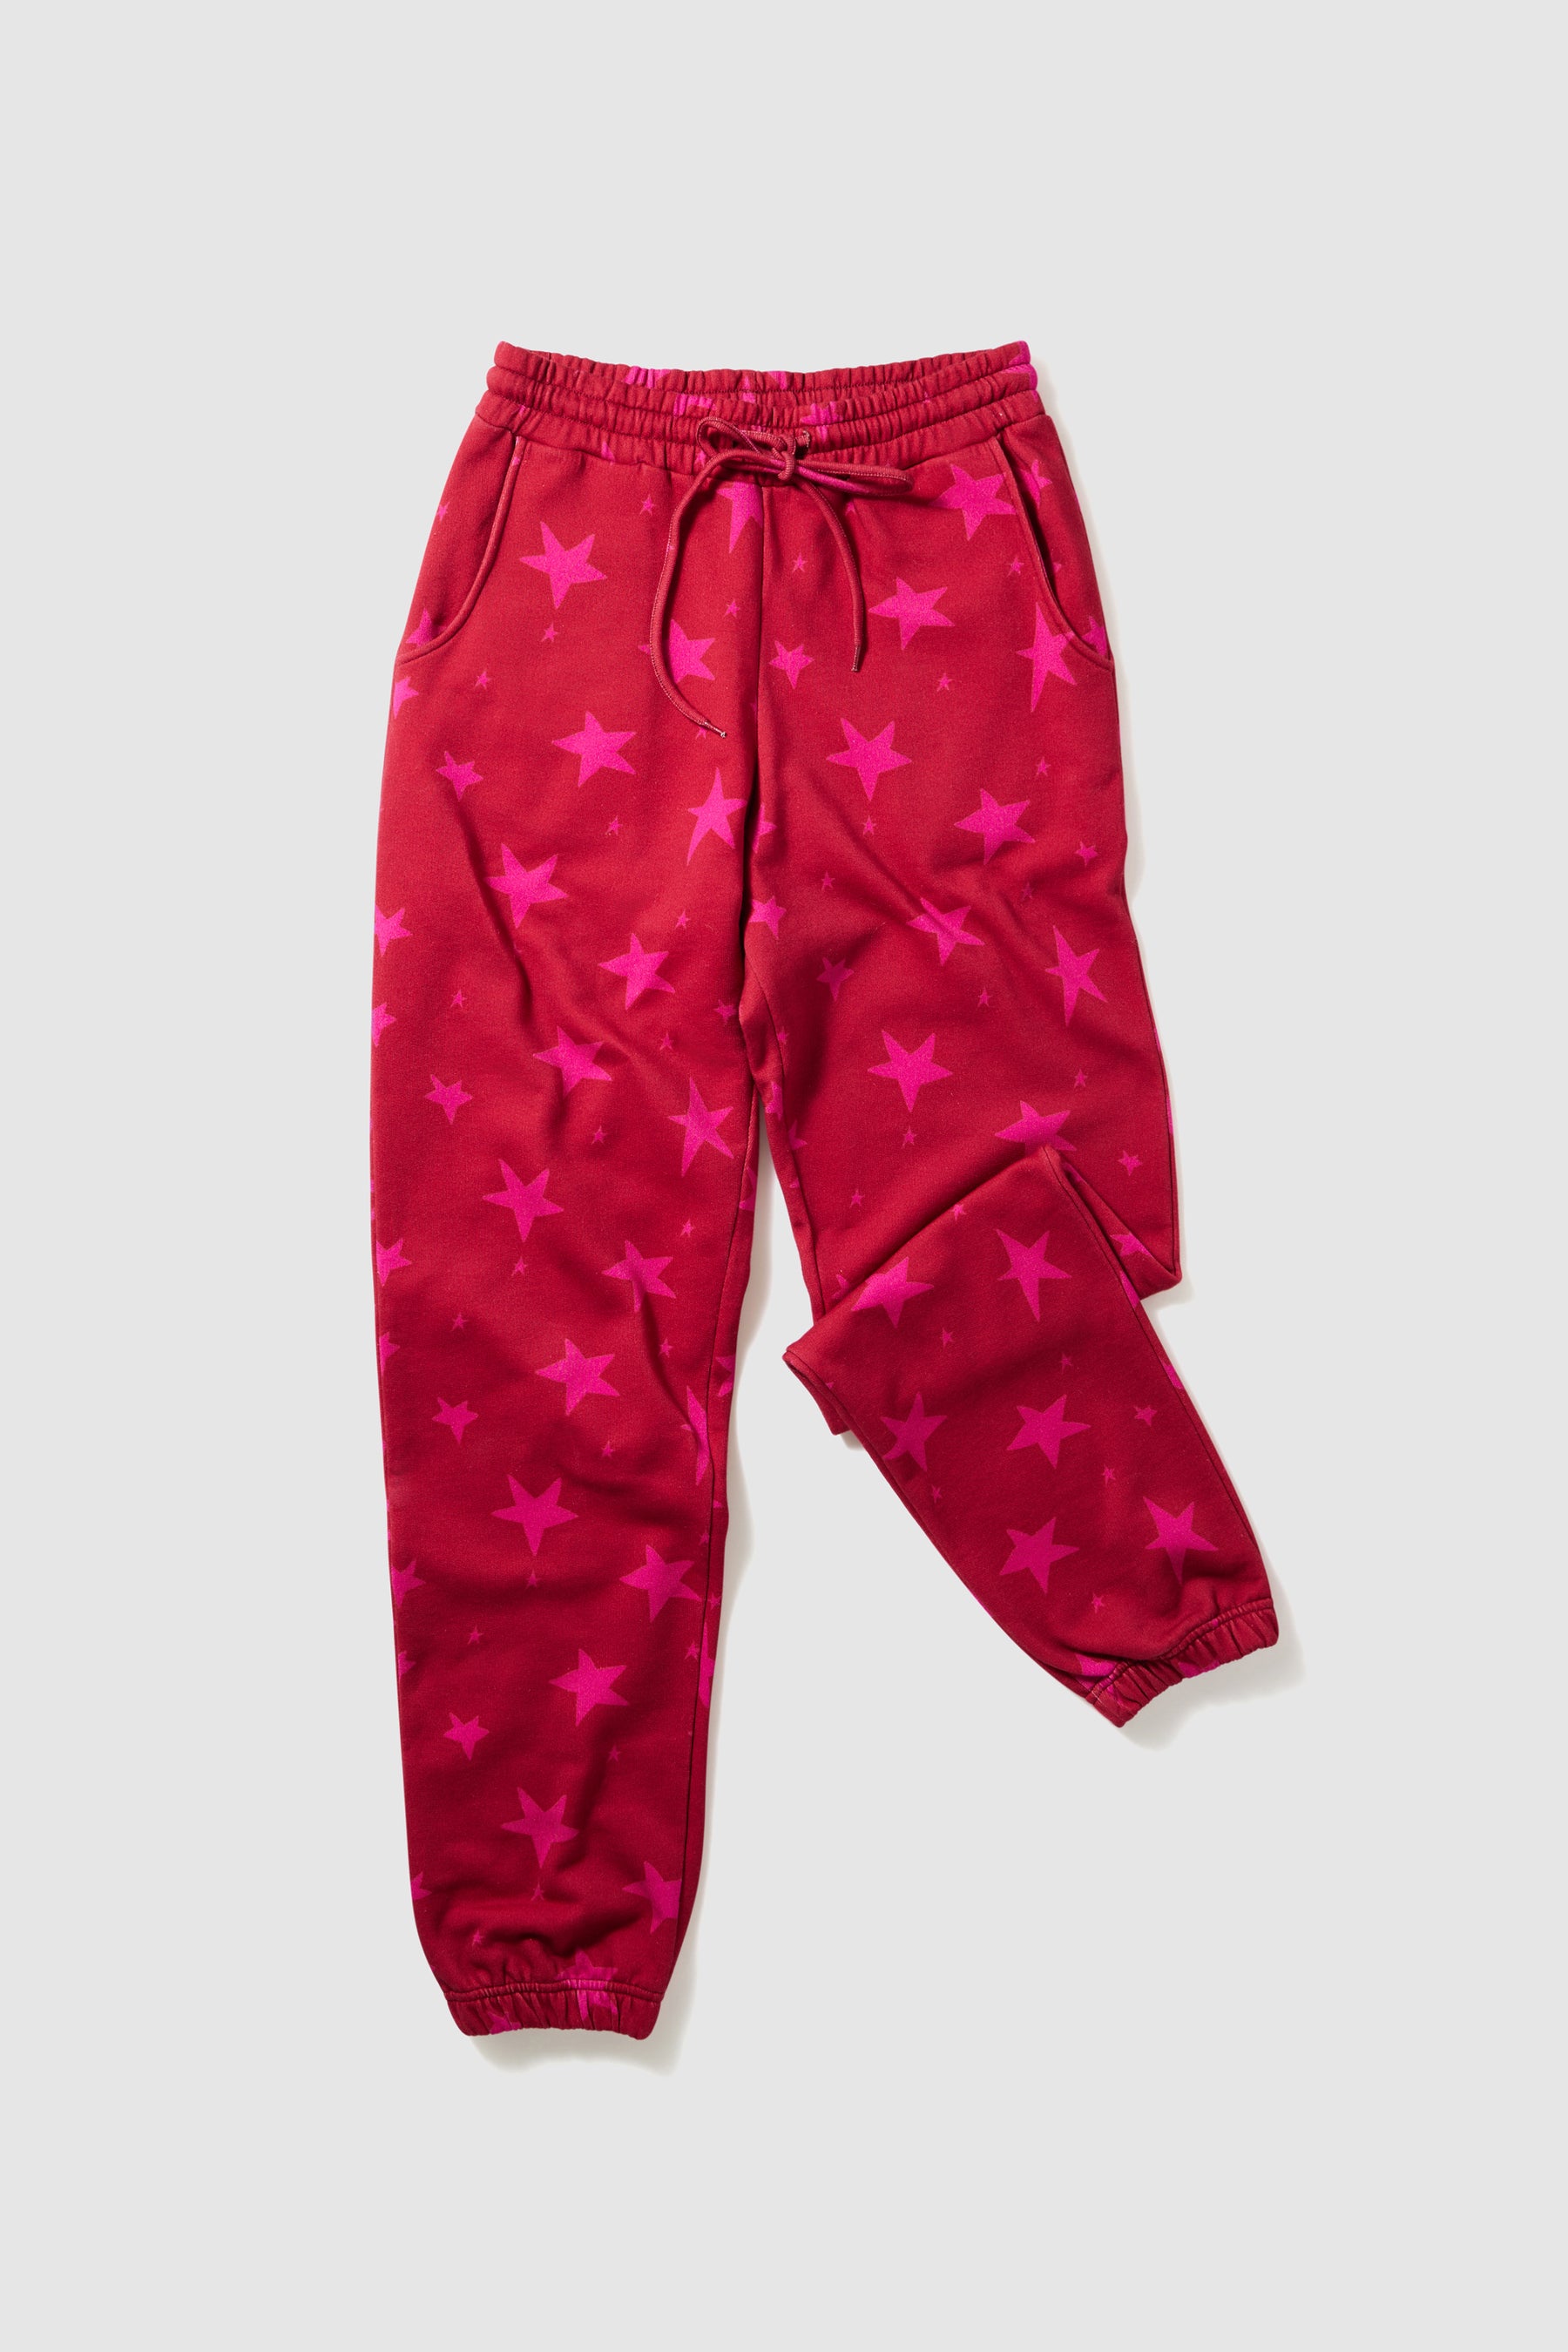 Kiara pants in All Stars printed fleece